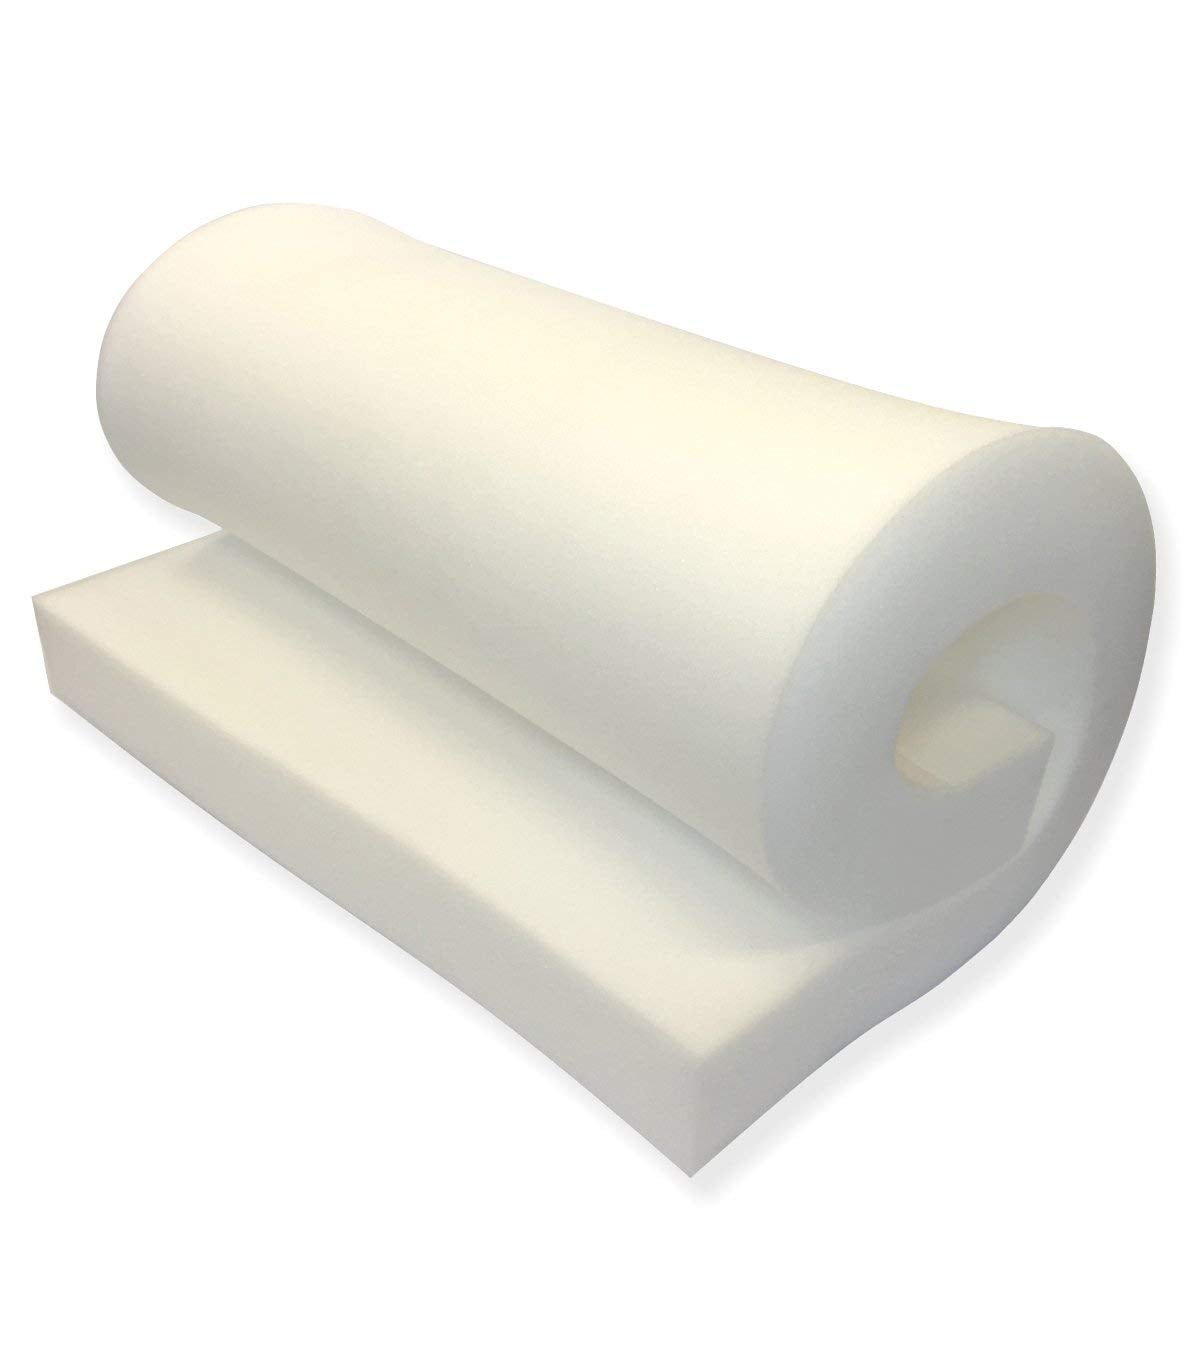 1/2x24x72 Mybecca Upholstery Foam Cushion Density Seat Replacement Upholstery Sheet Foam Padding